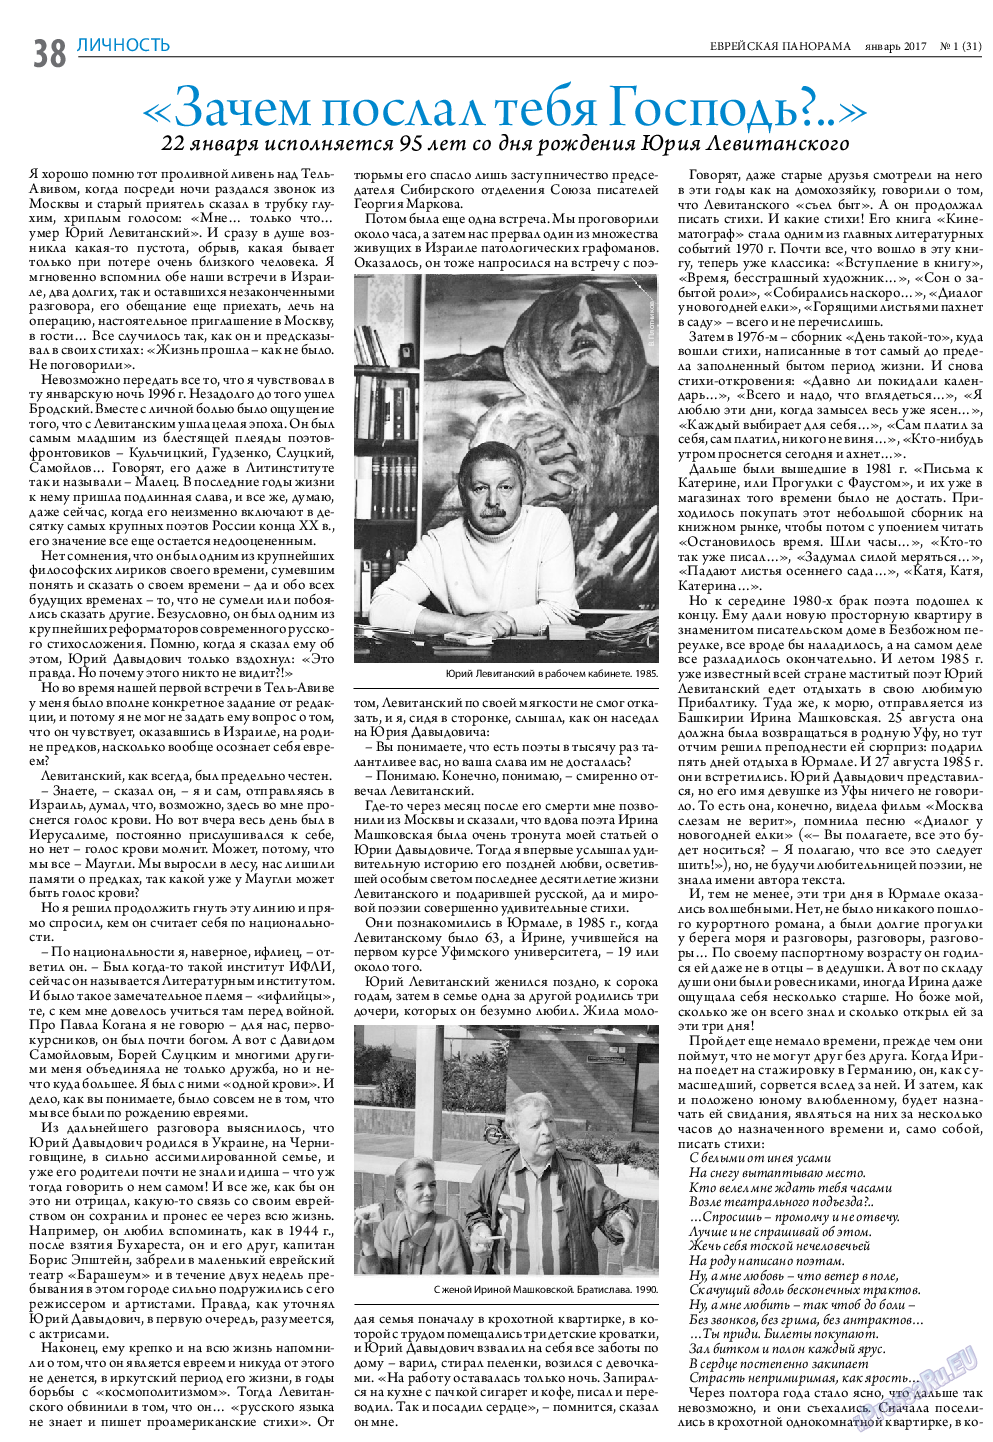 Еврейская панорама, газета. 2017 №1 стр.38